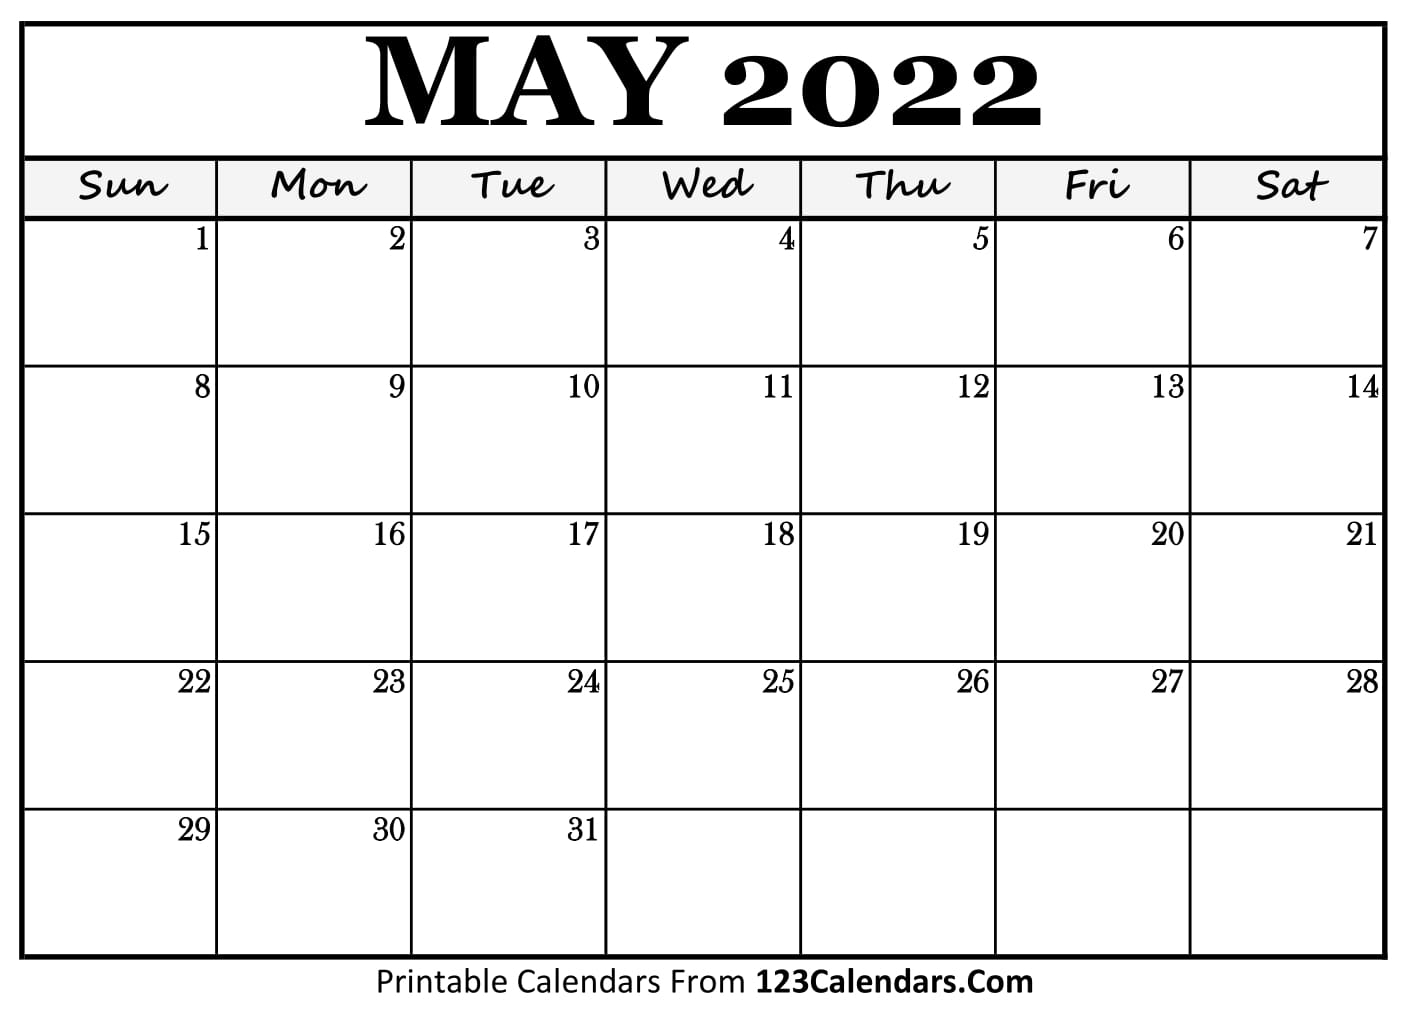 May 2022 Holiday Calendar Printable May 2022 Calendar Templates - 123Calendars.com